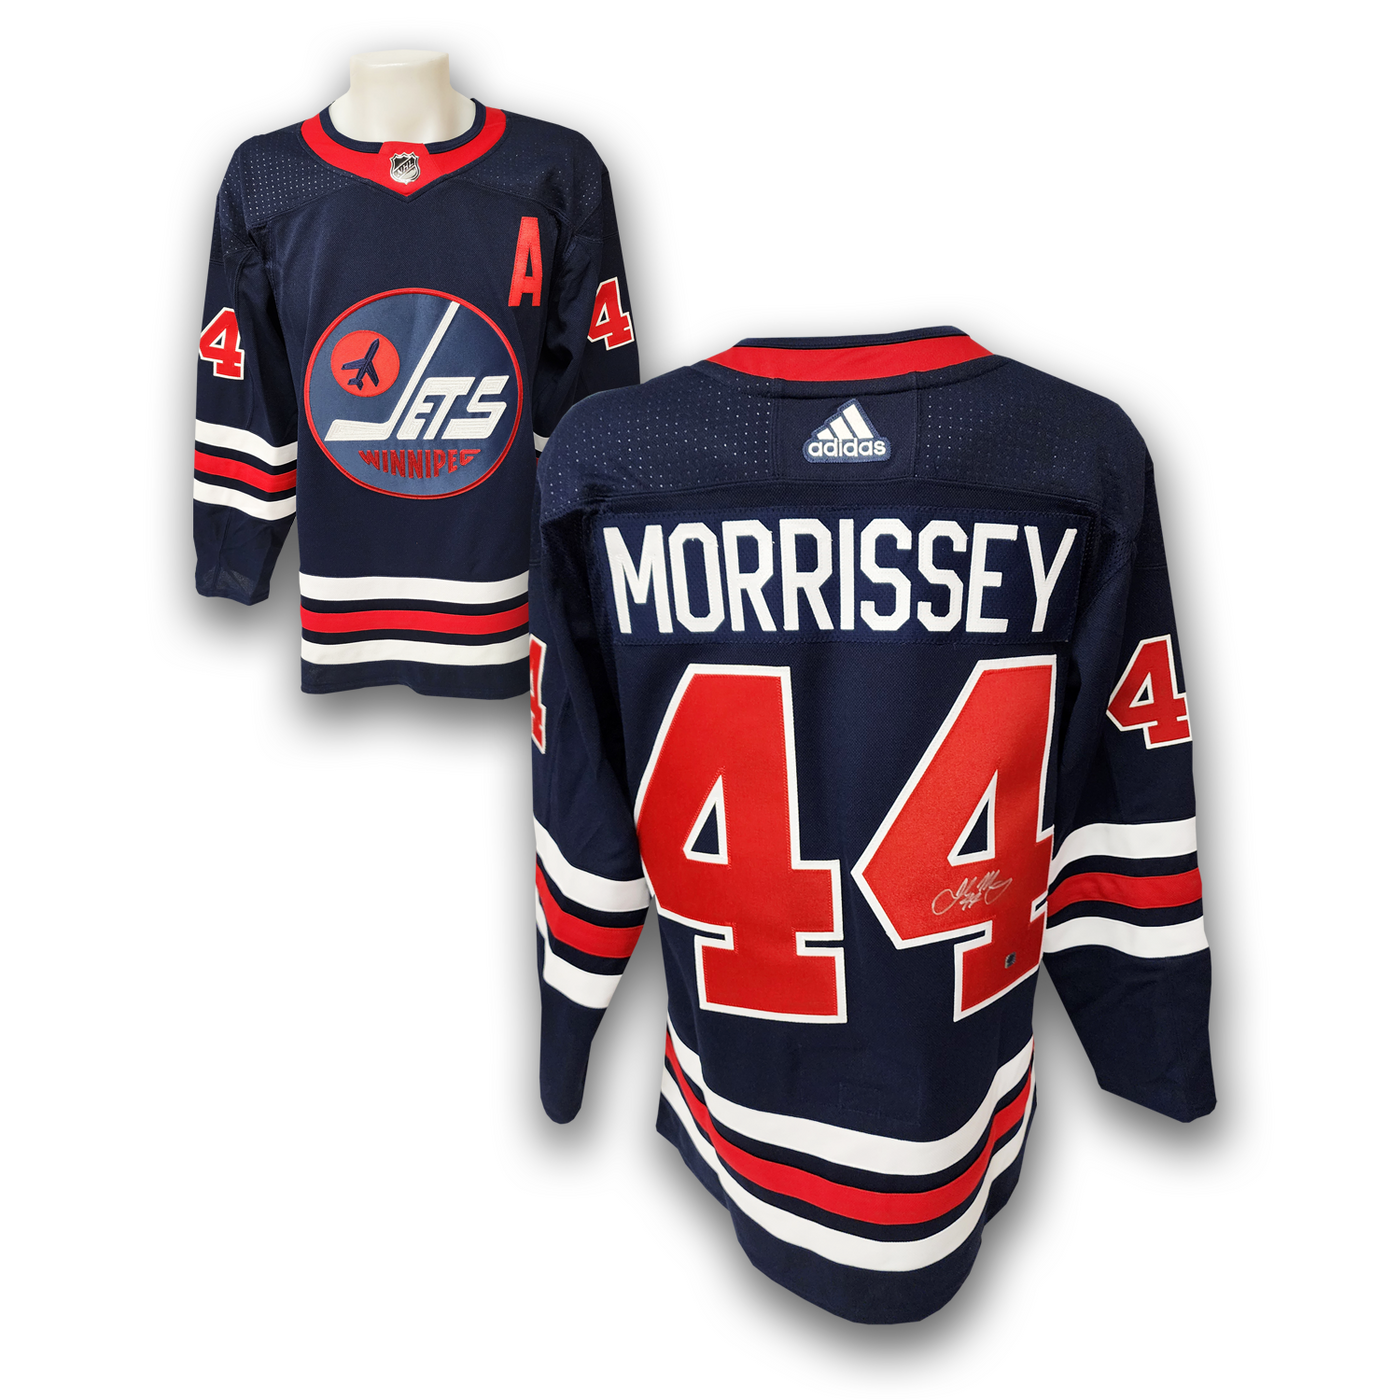 Josh Morrissey Autographed Winnipeg Jets Alternate Adidas Jersey